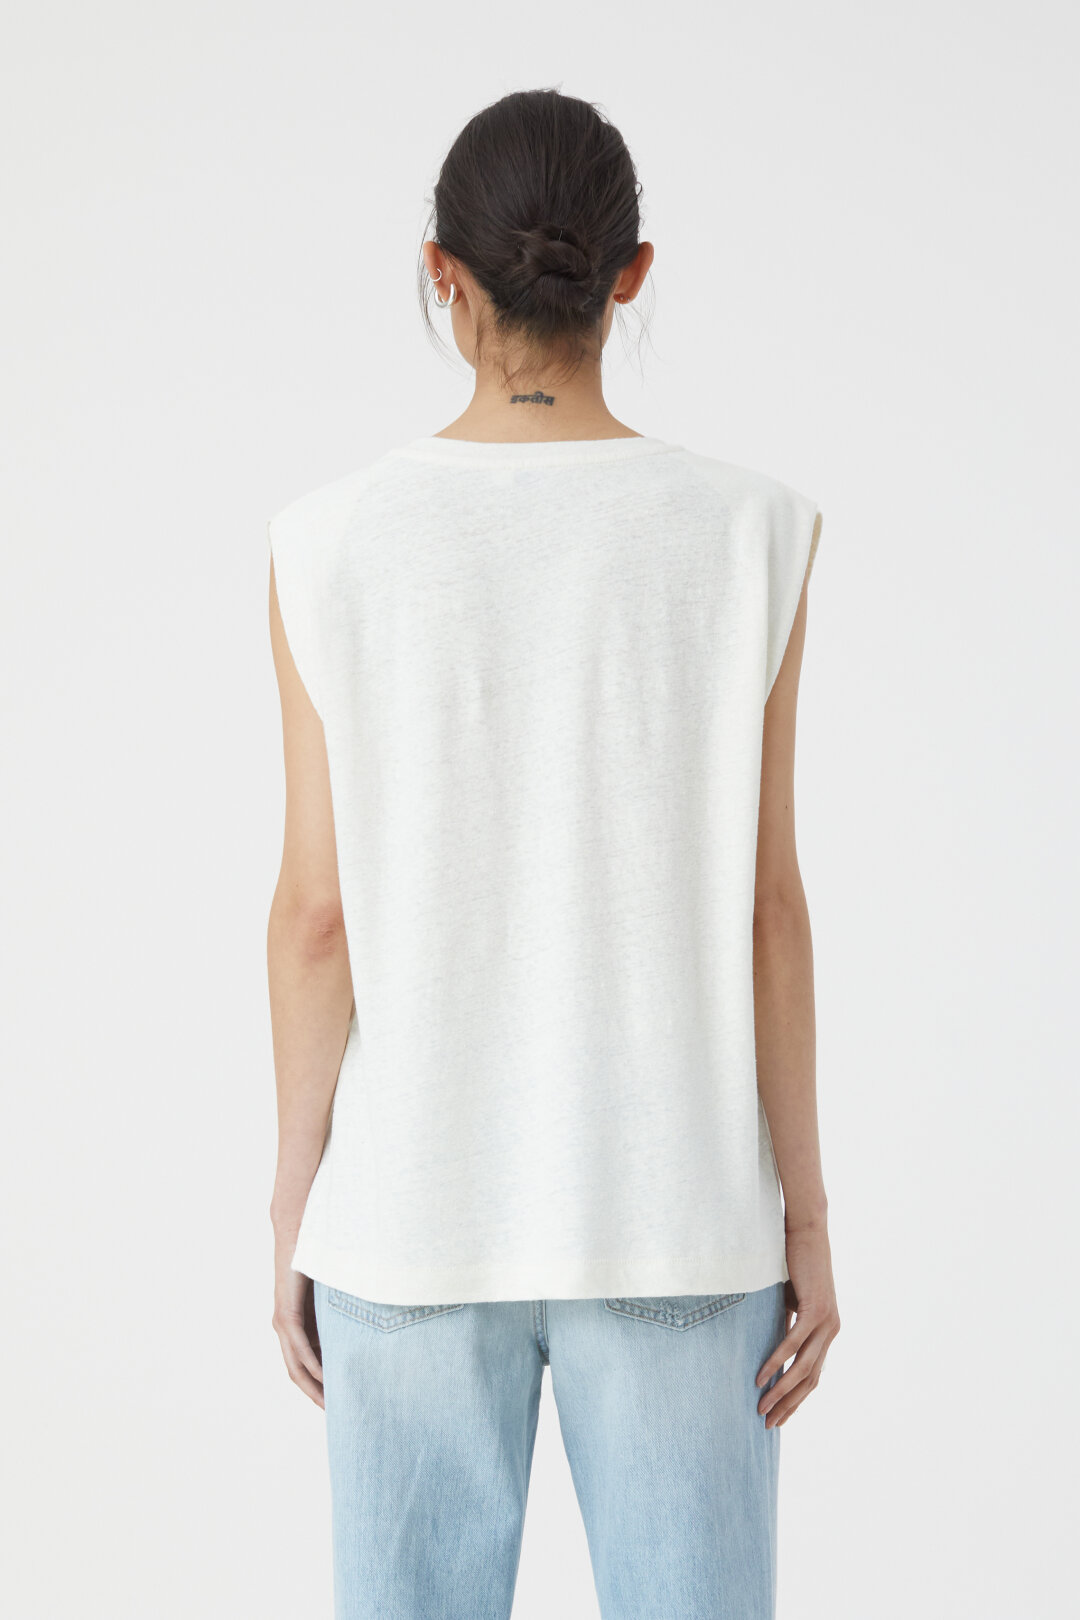 CLOSED Sleeveless T-Shirt in Ivory